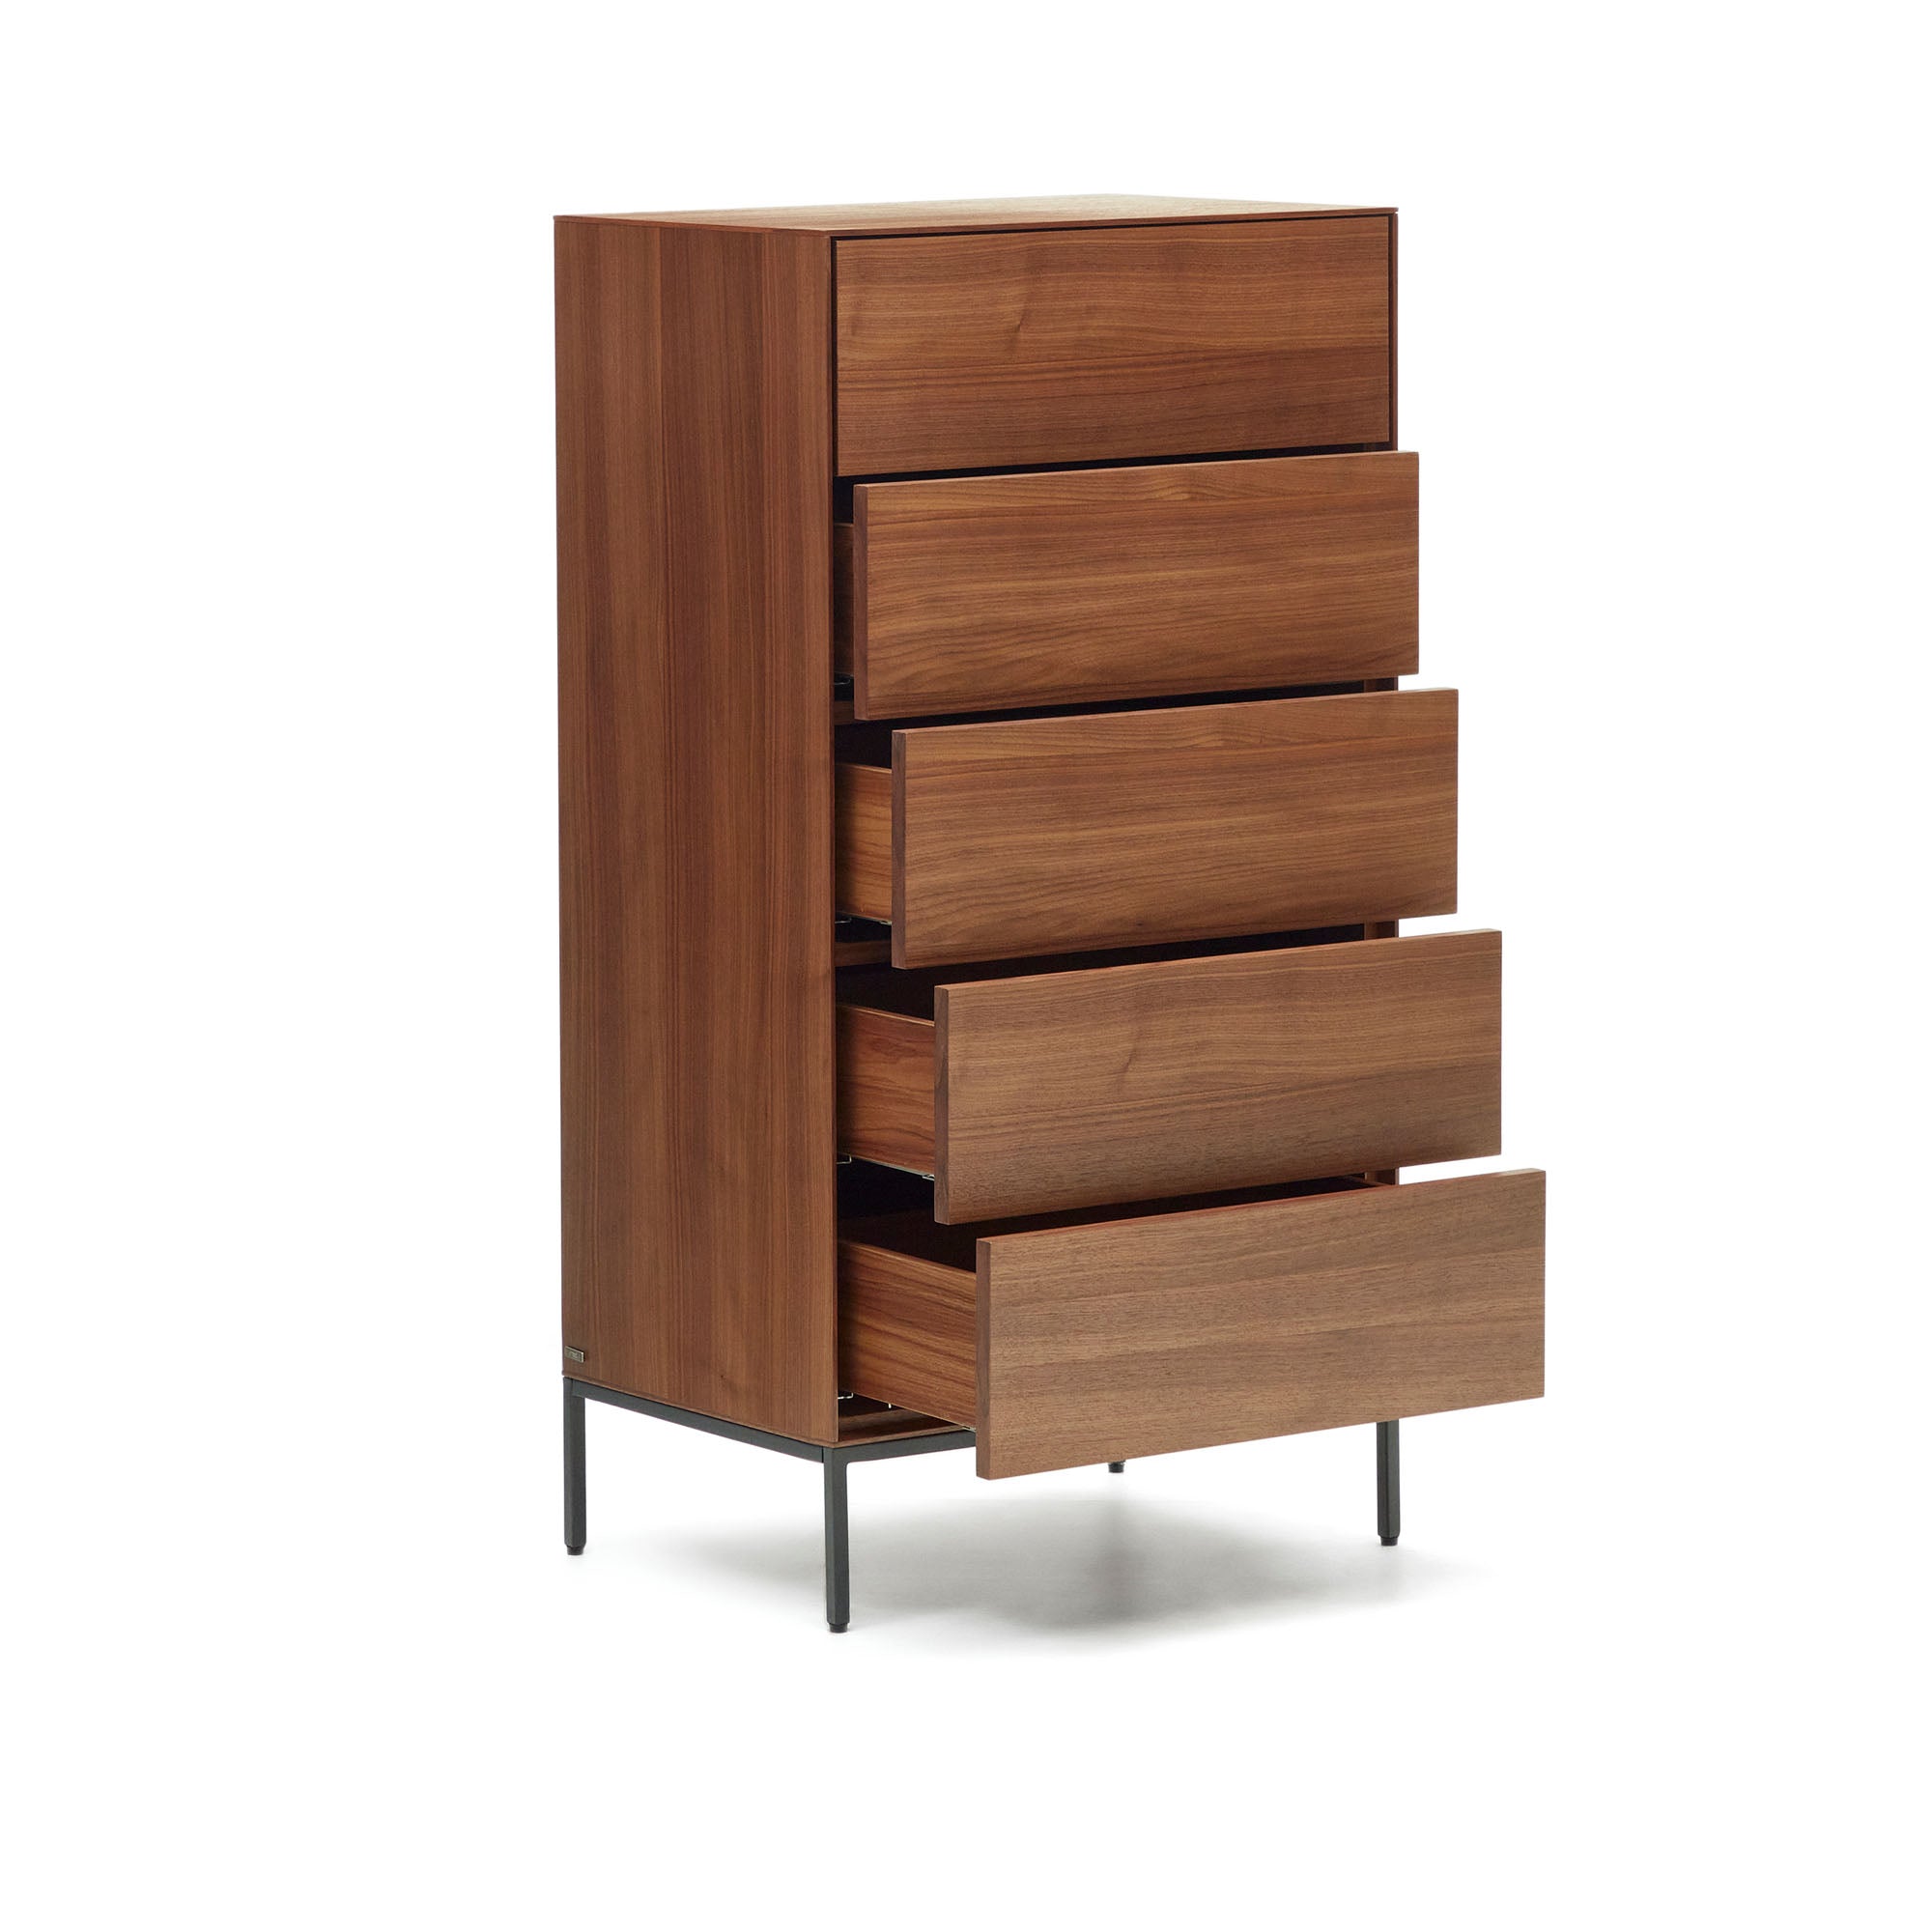 Vedrana 5 drawer chest of drawers in walnut veneer with black steel legs, 60 x 114 cm